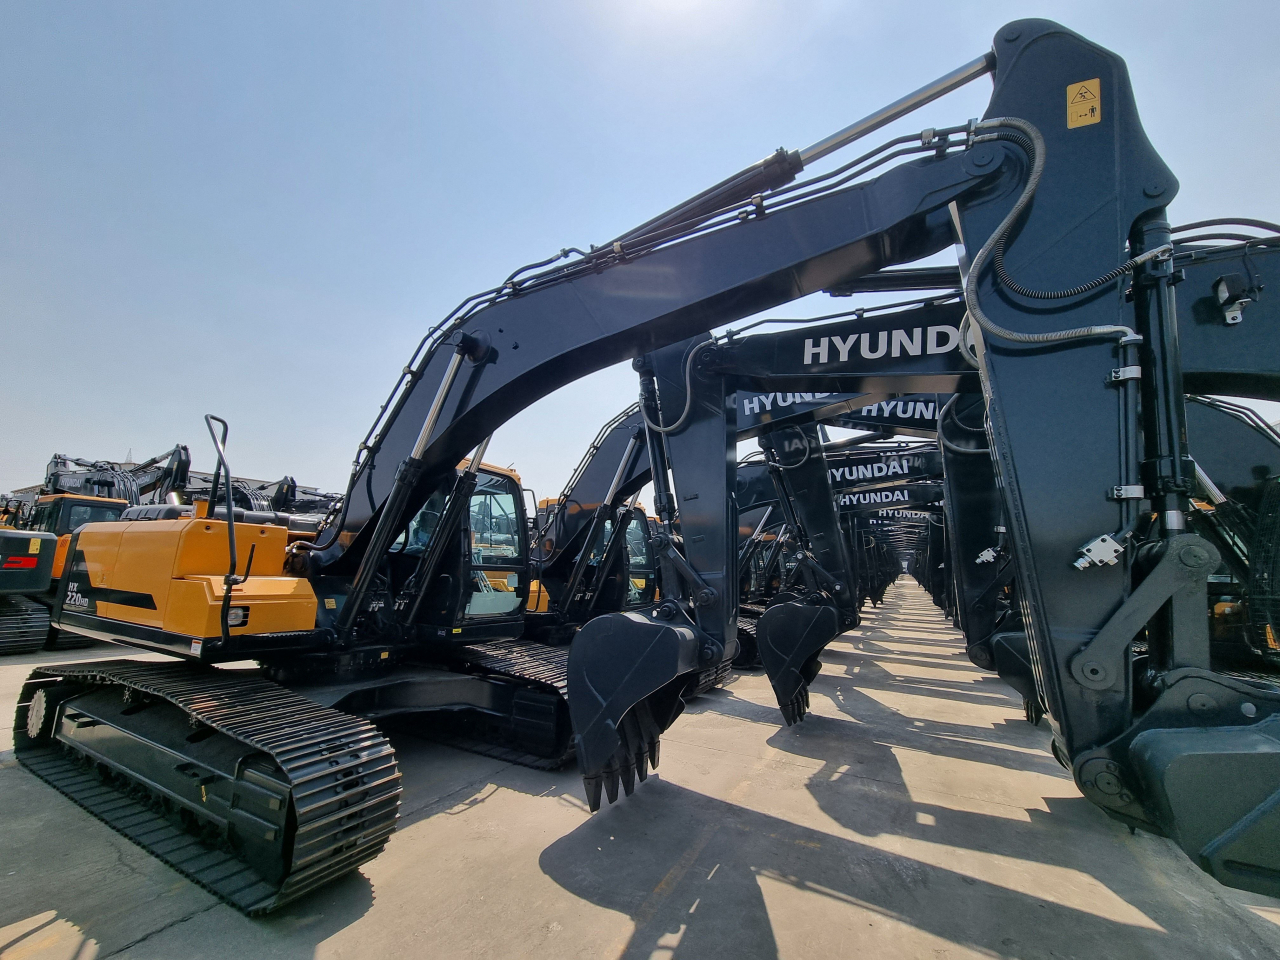 HD Hyundai Construction Equipment's excavator manufacturing plant site in Pune, India (HD Hyundai)